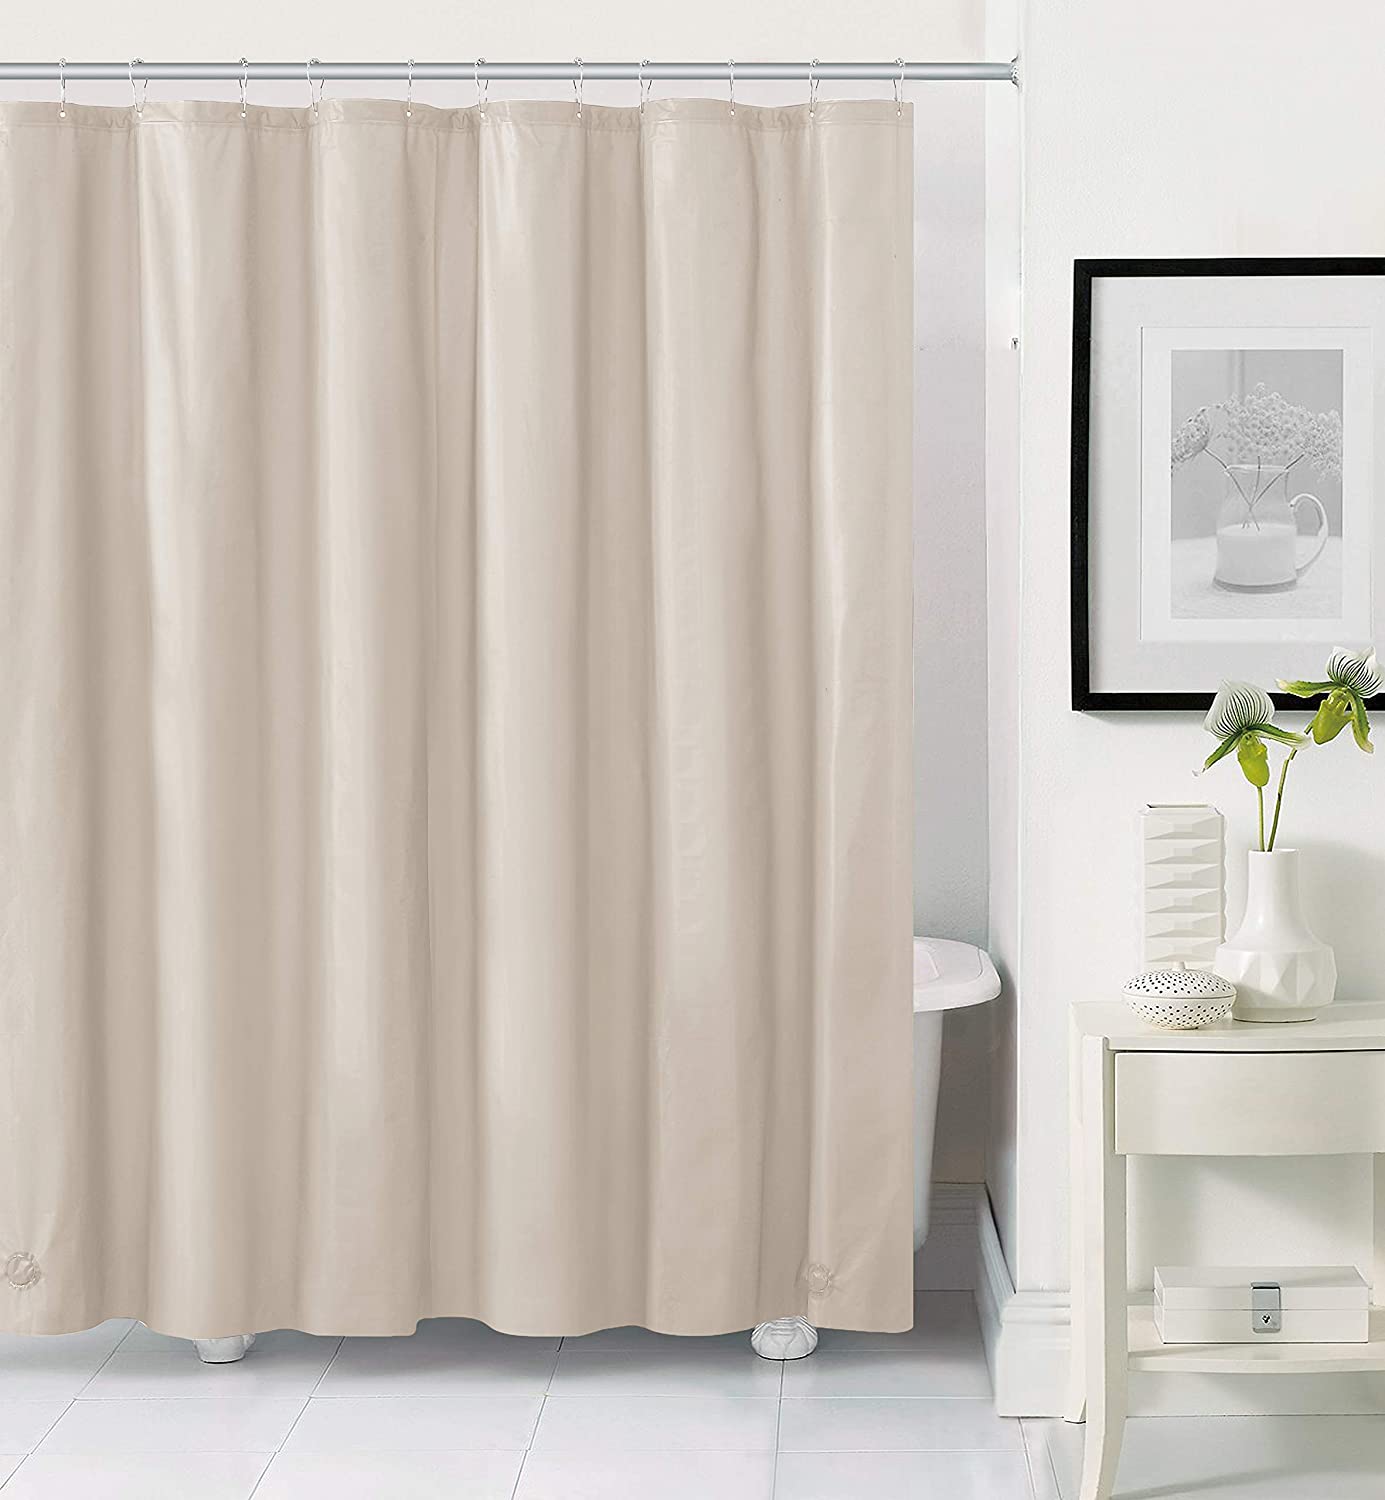 GoodGram Waterproof Odor-Free Shower Curtain Liner